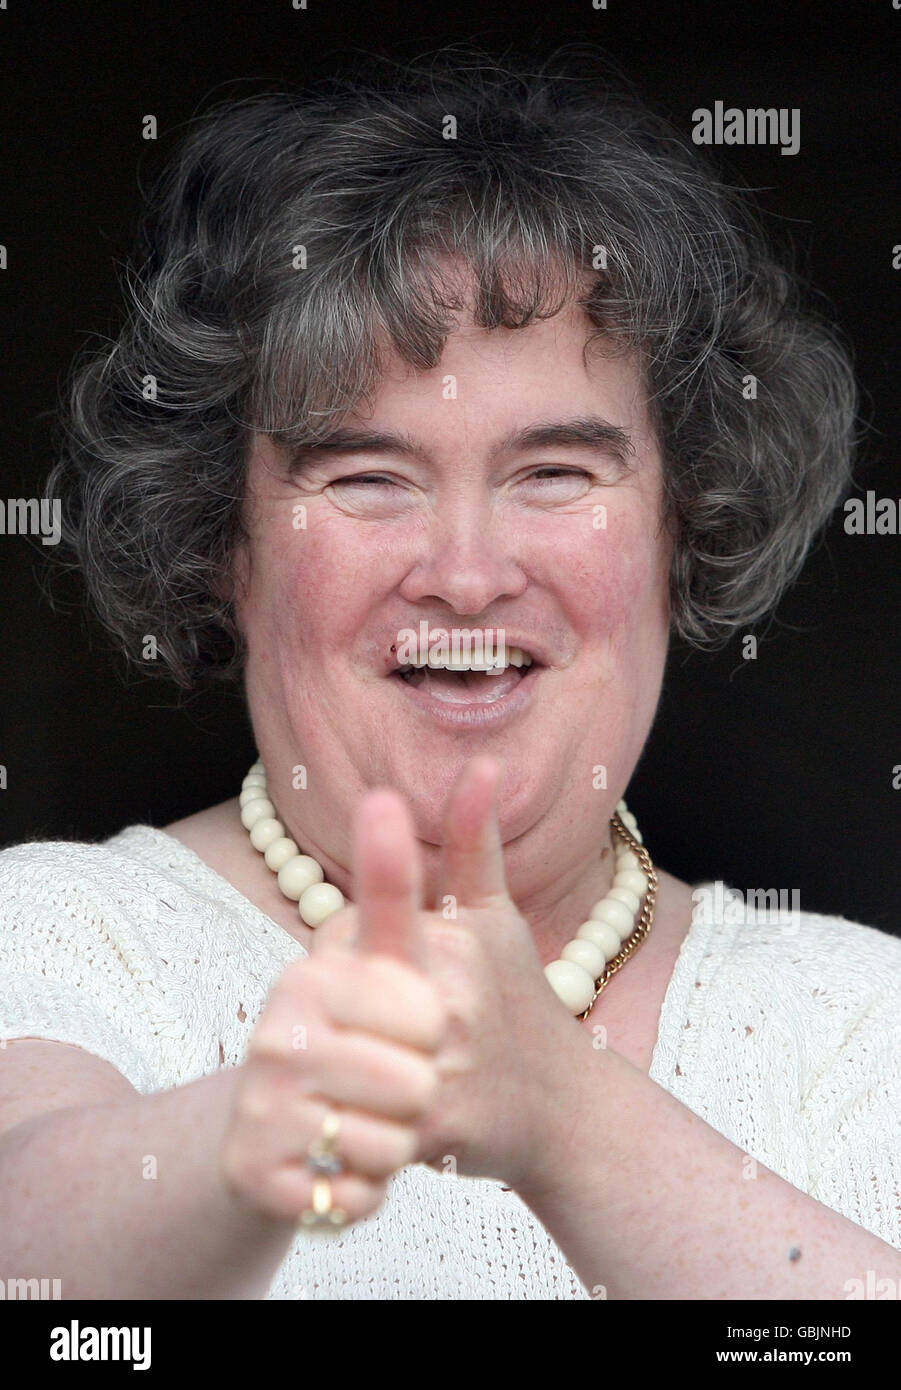 Britains Got Talent star Susan Boyle. Britains Got Talent star Susan Boyle gives a thumbs up at her front door in Blackburn,West Lothian. Stock Photo